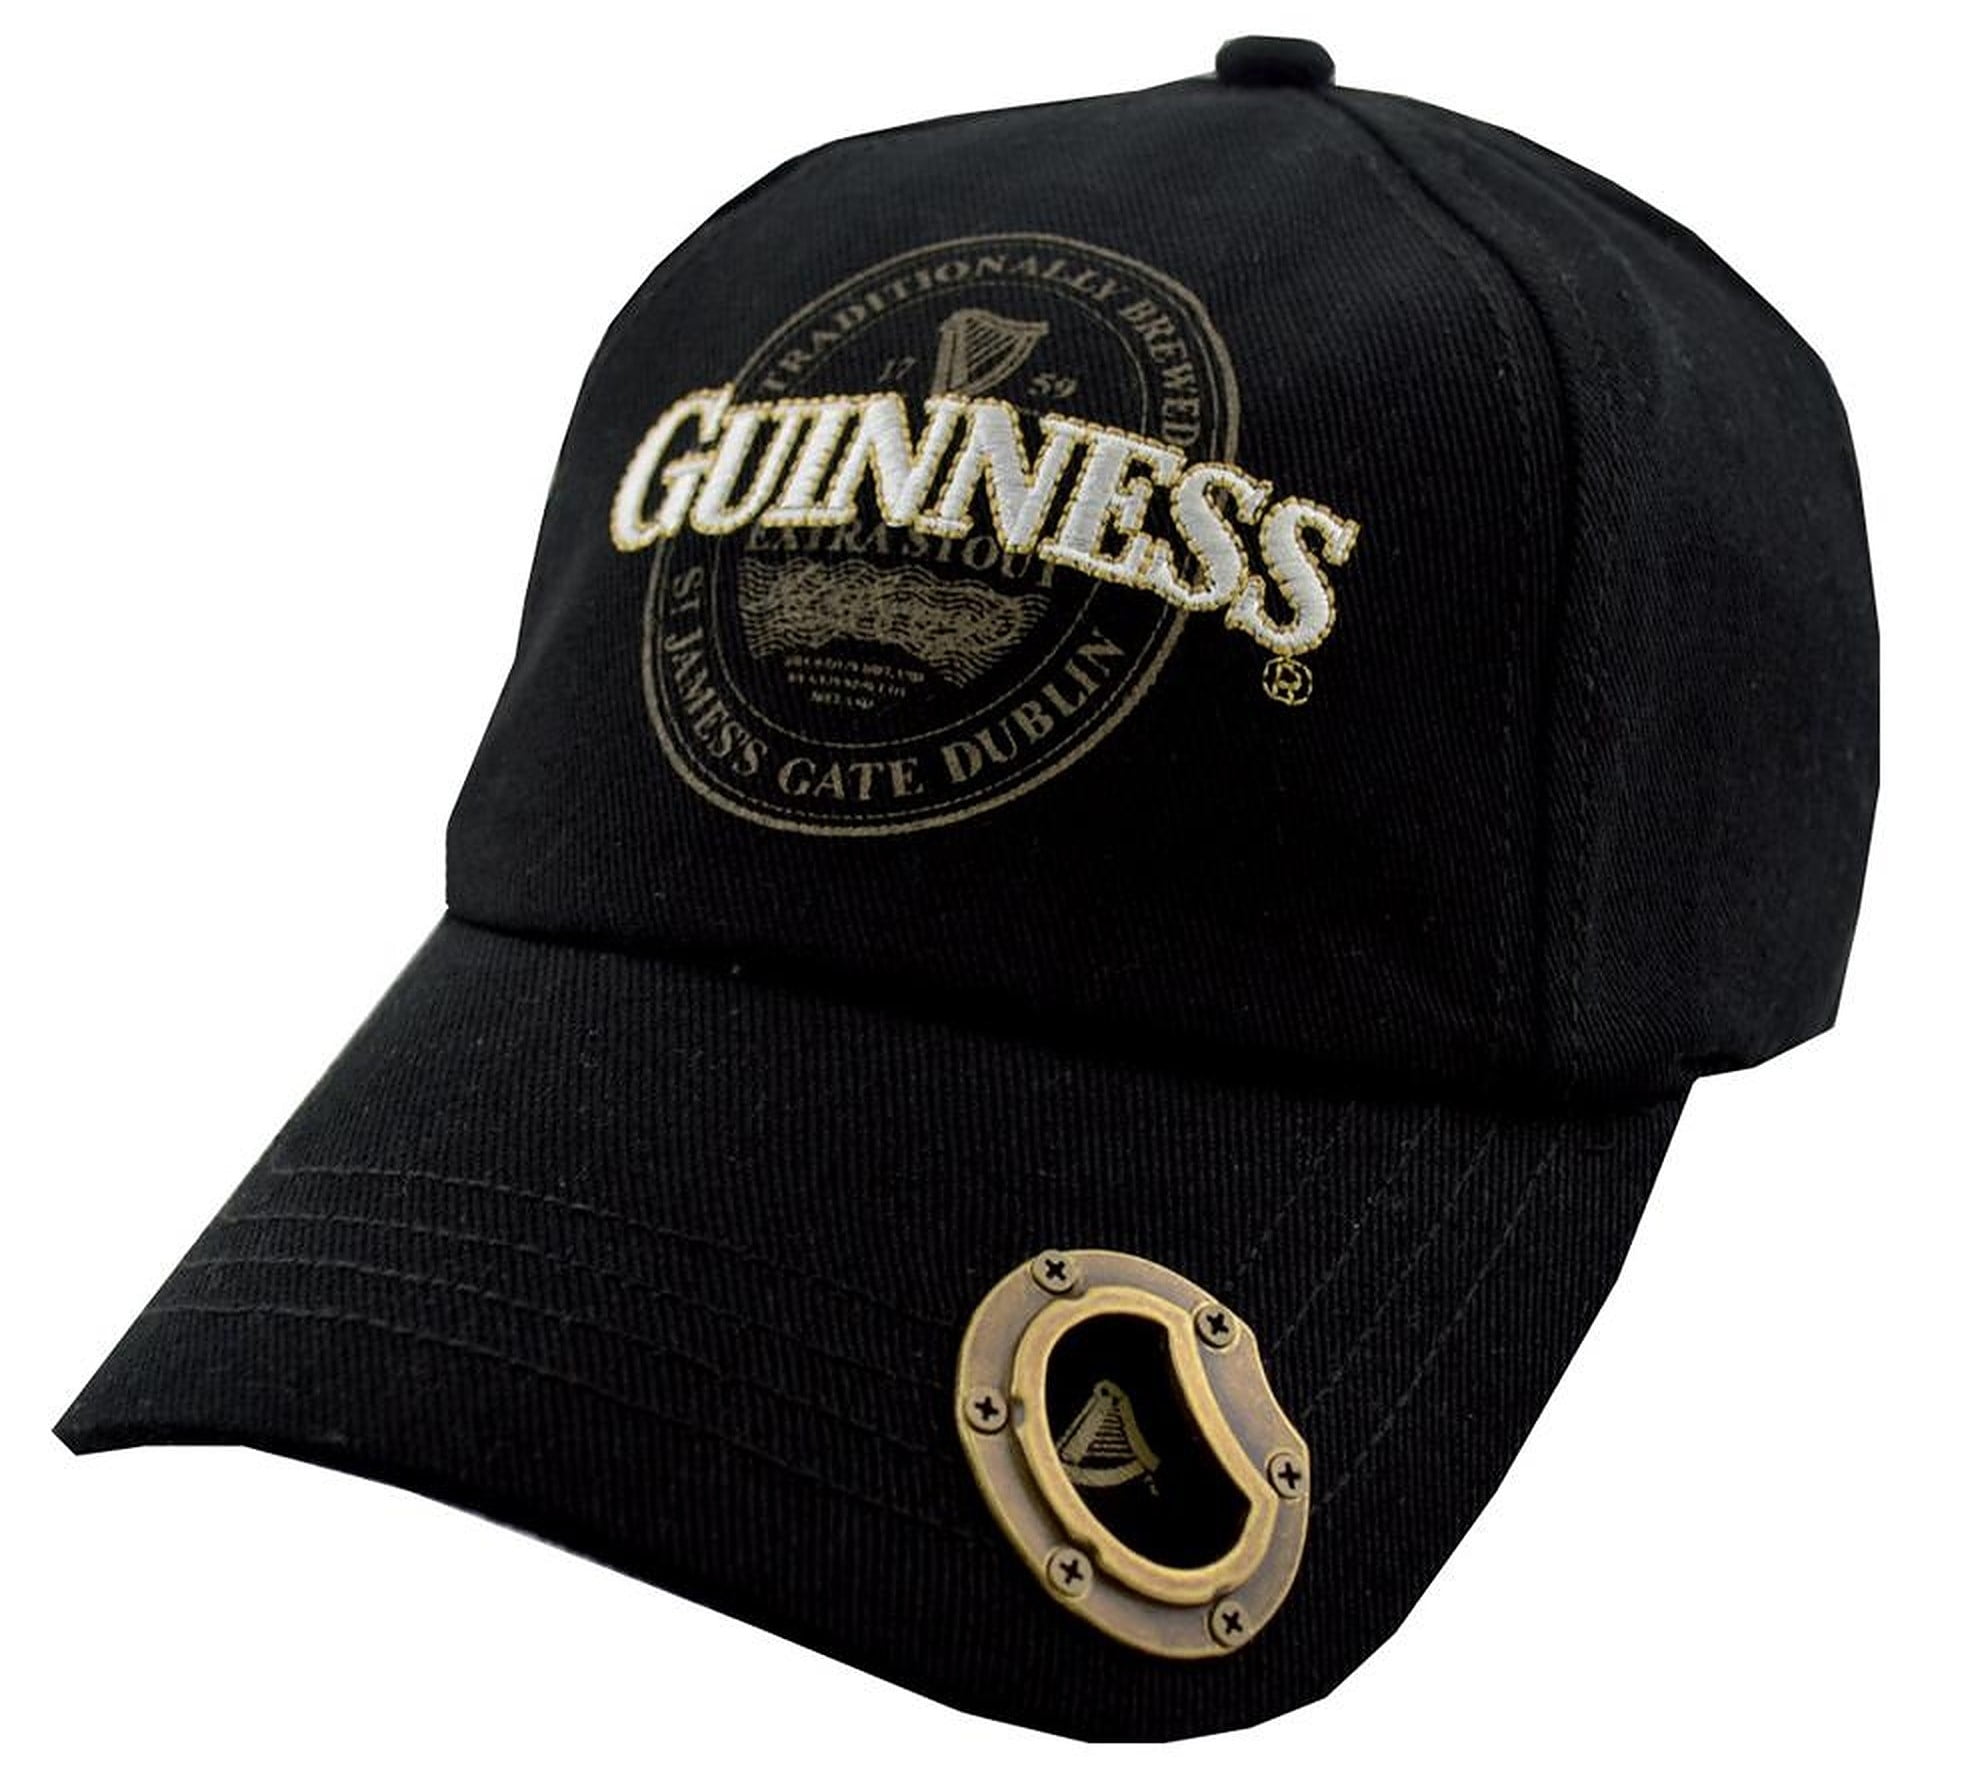 Black Guinness Woven Beanie Hat With Dublin Ireland Label Design